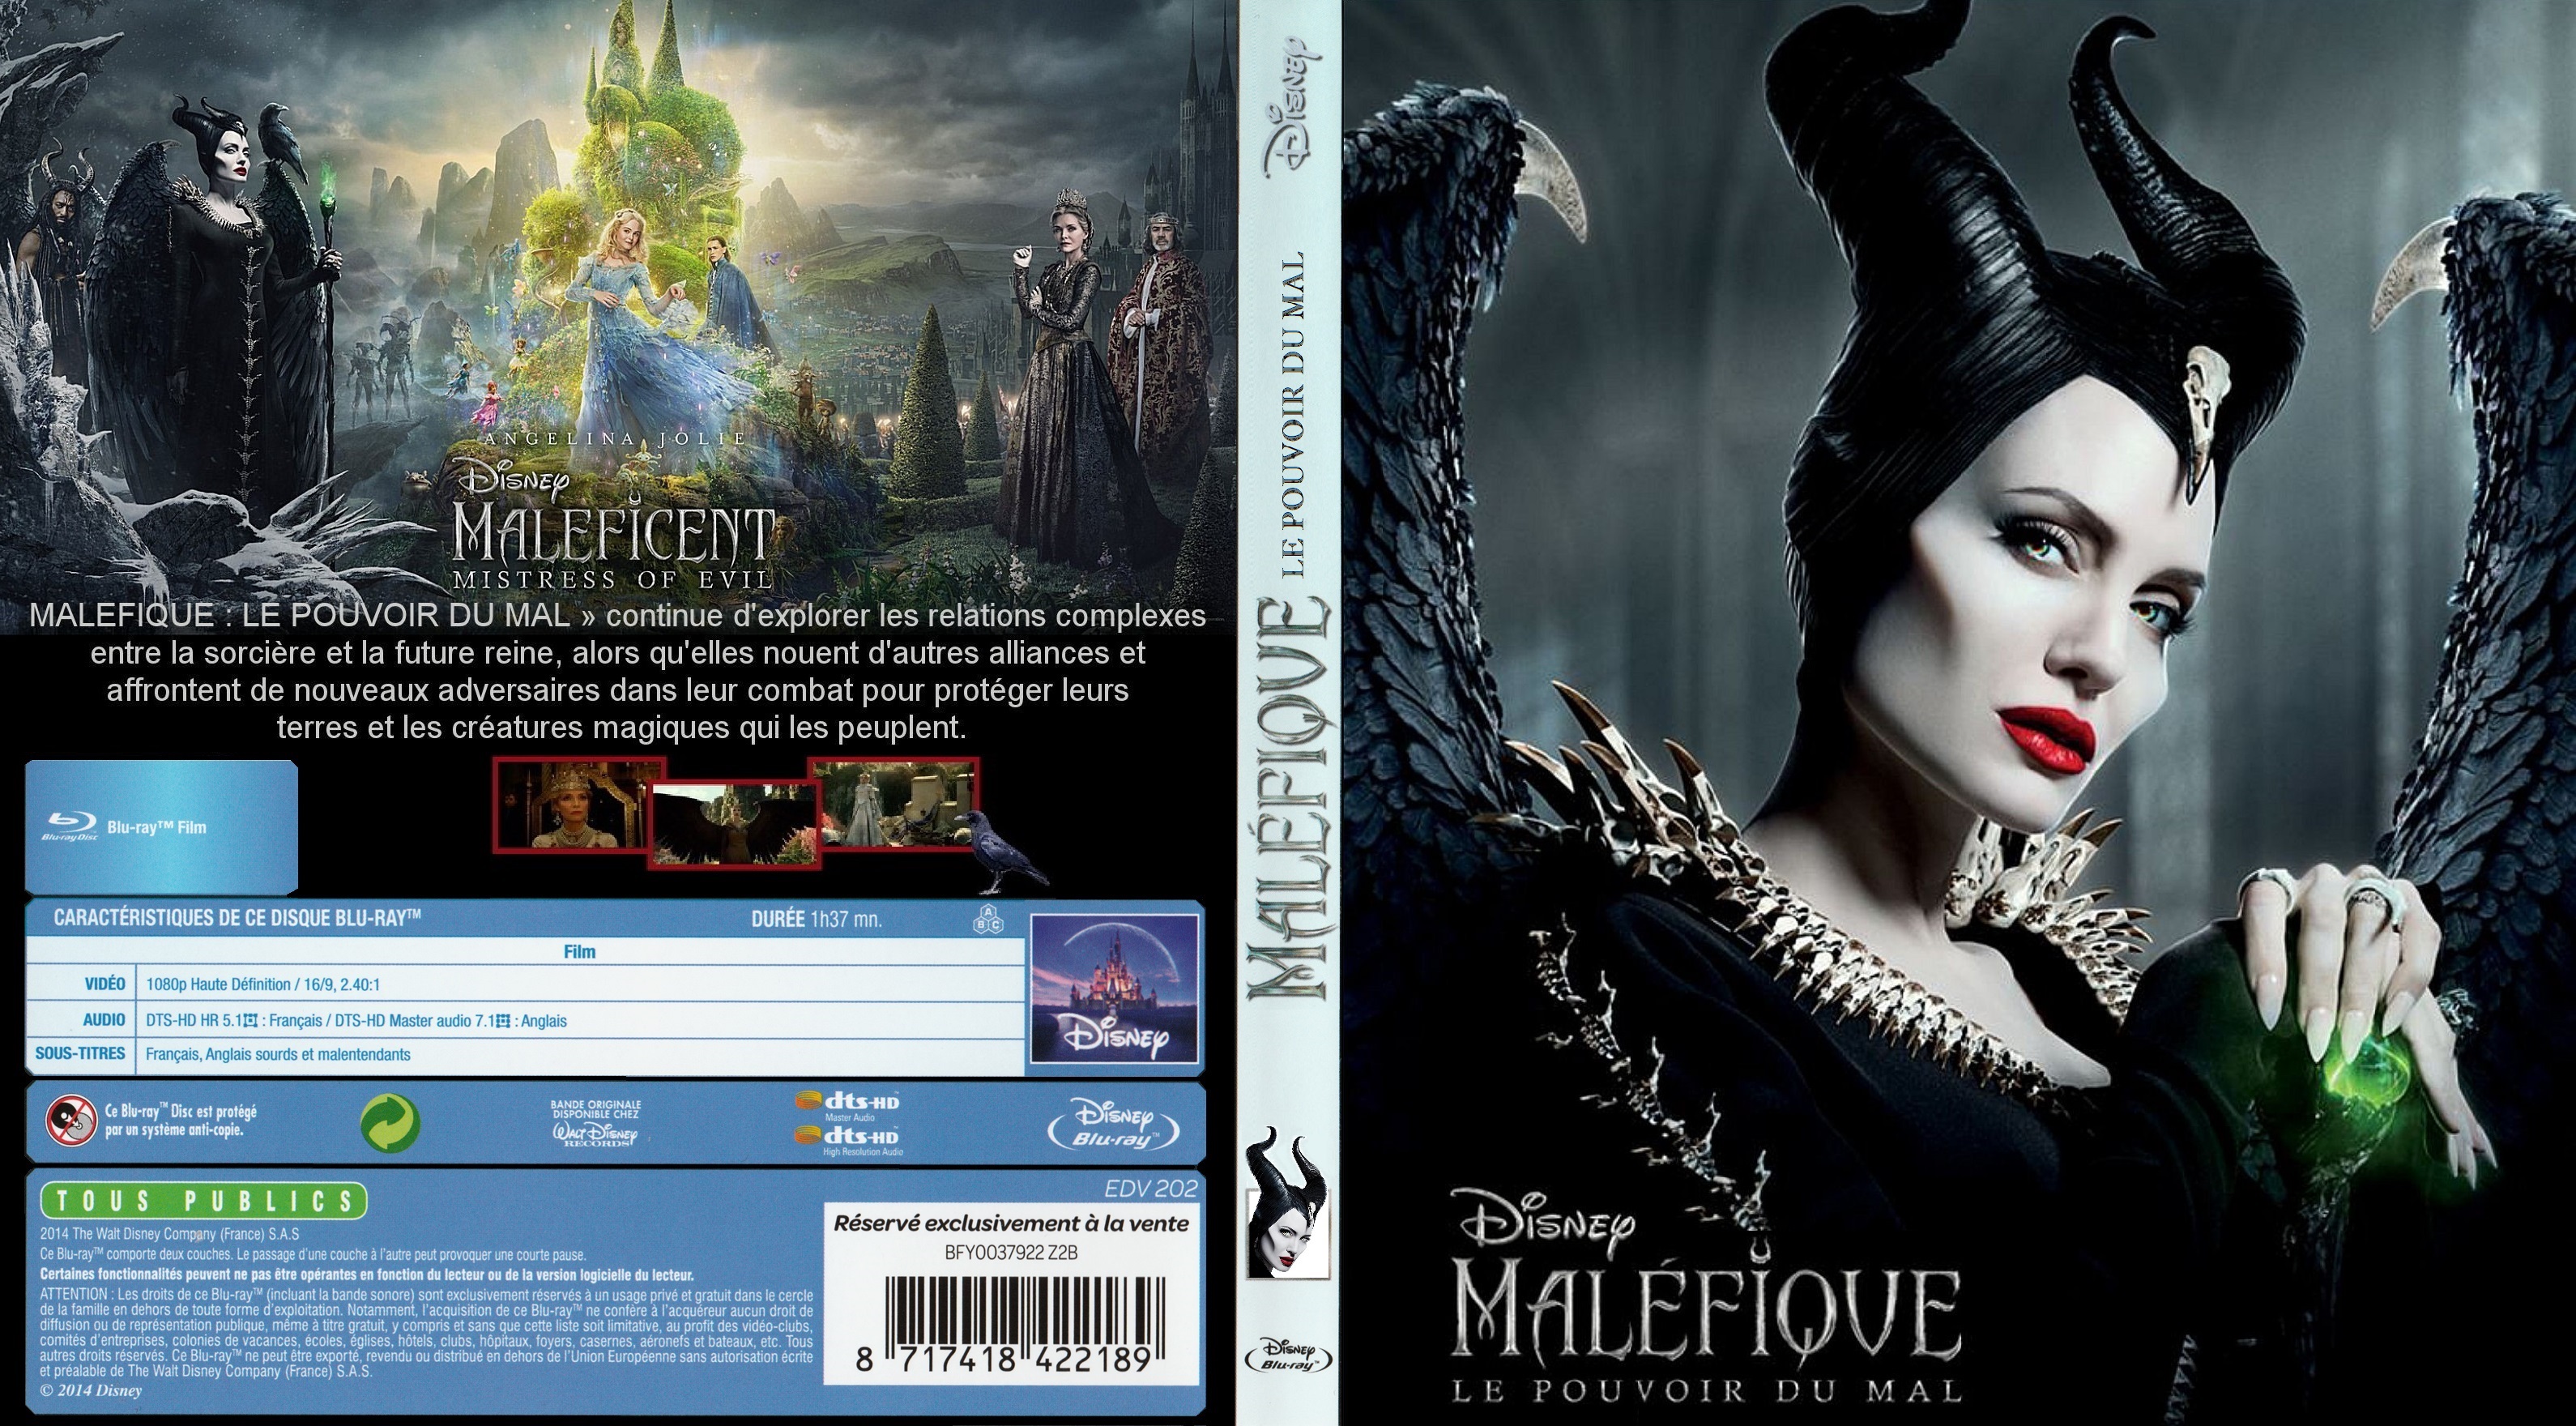 Jaquette DVD Malfique : Le Pouvoir du Mal custom (BLU-RAY) v2